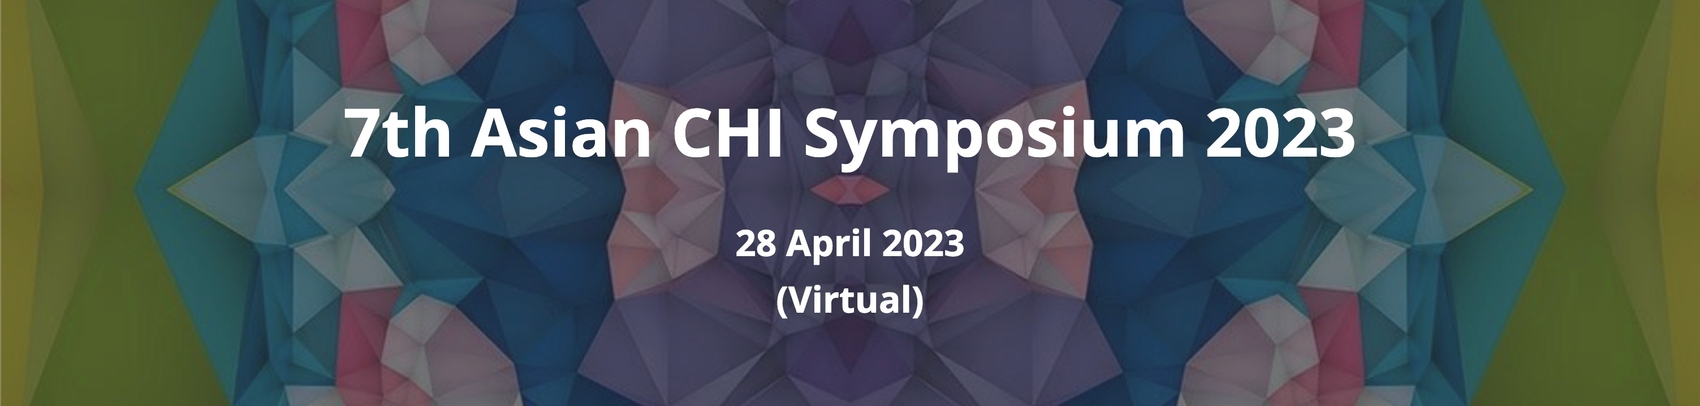 Mercari R4D HCI at 7th Asian CHI Symposium 2023